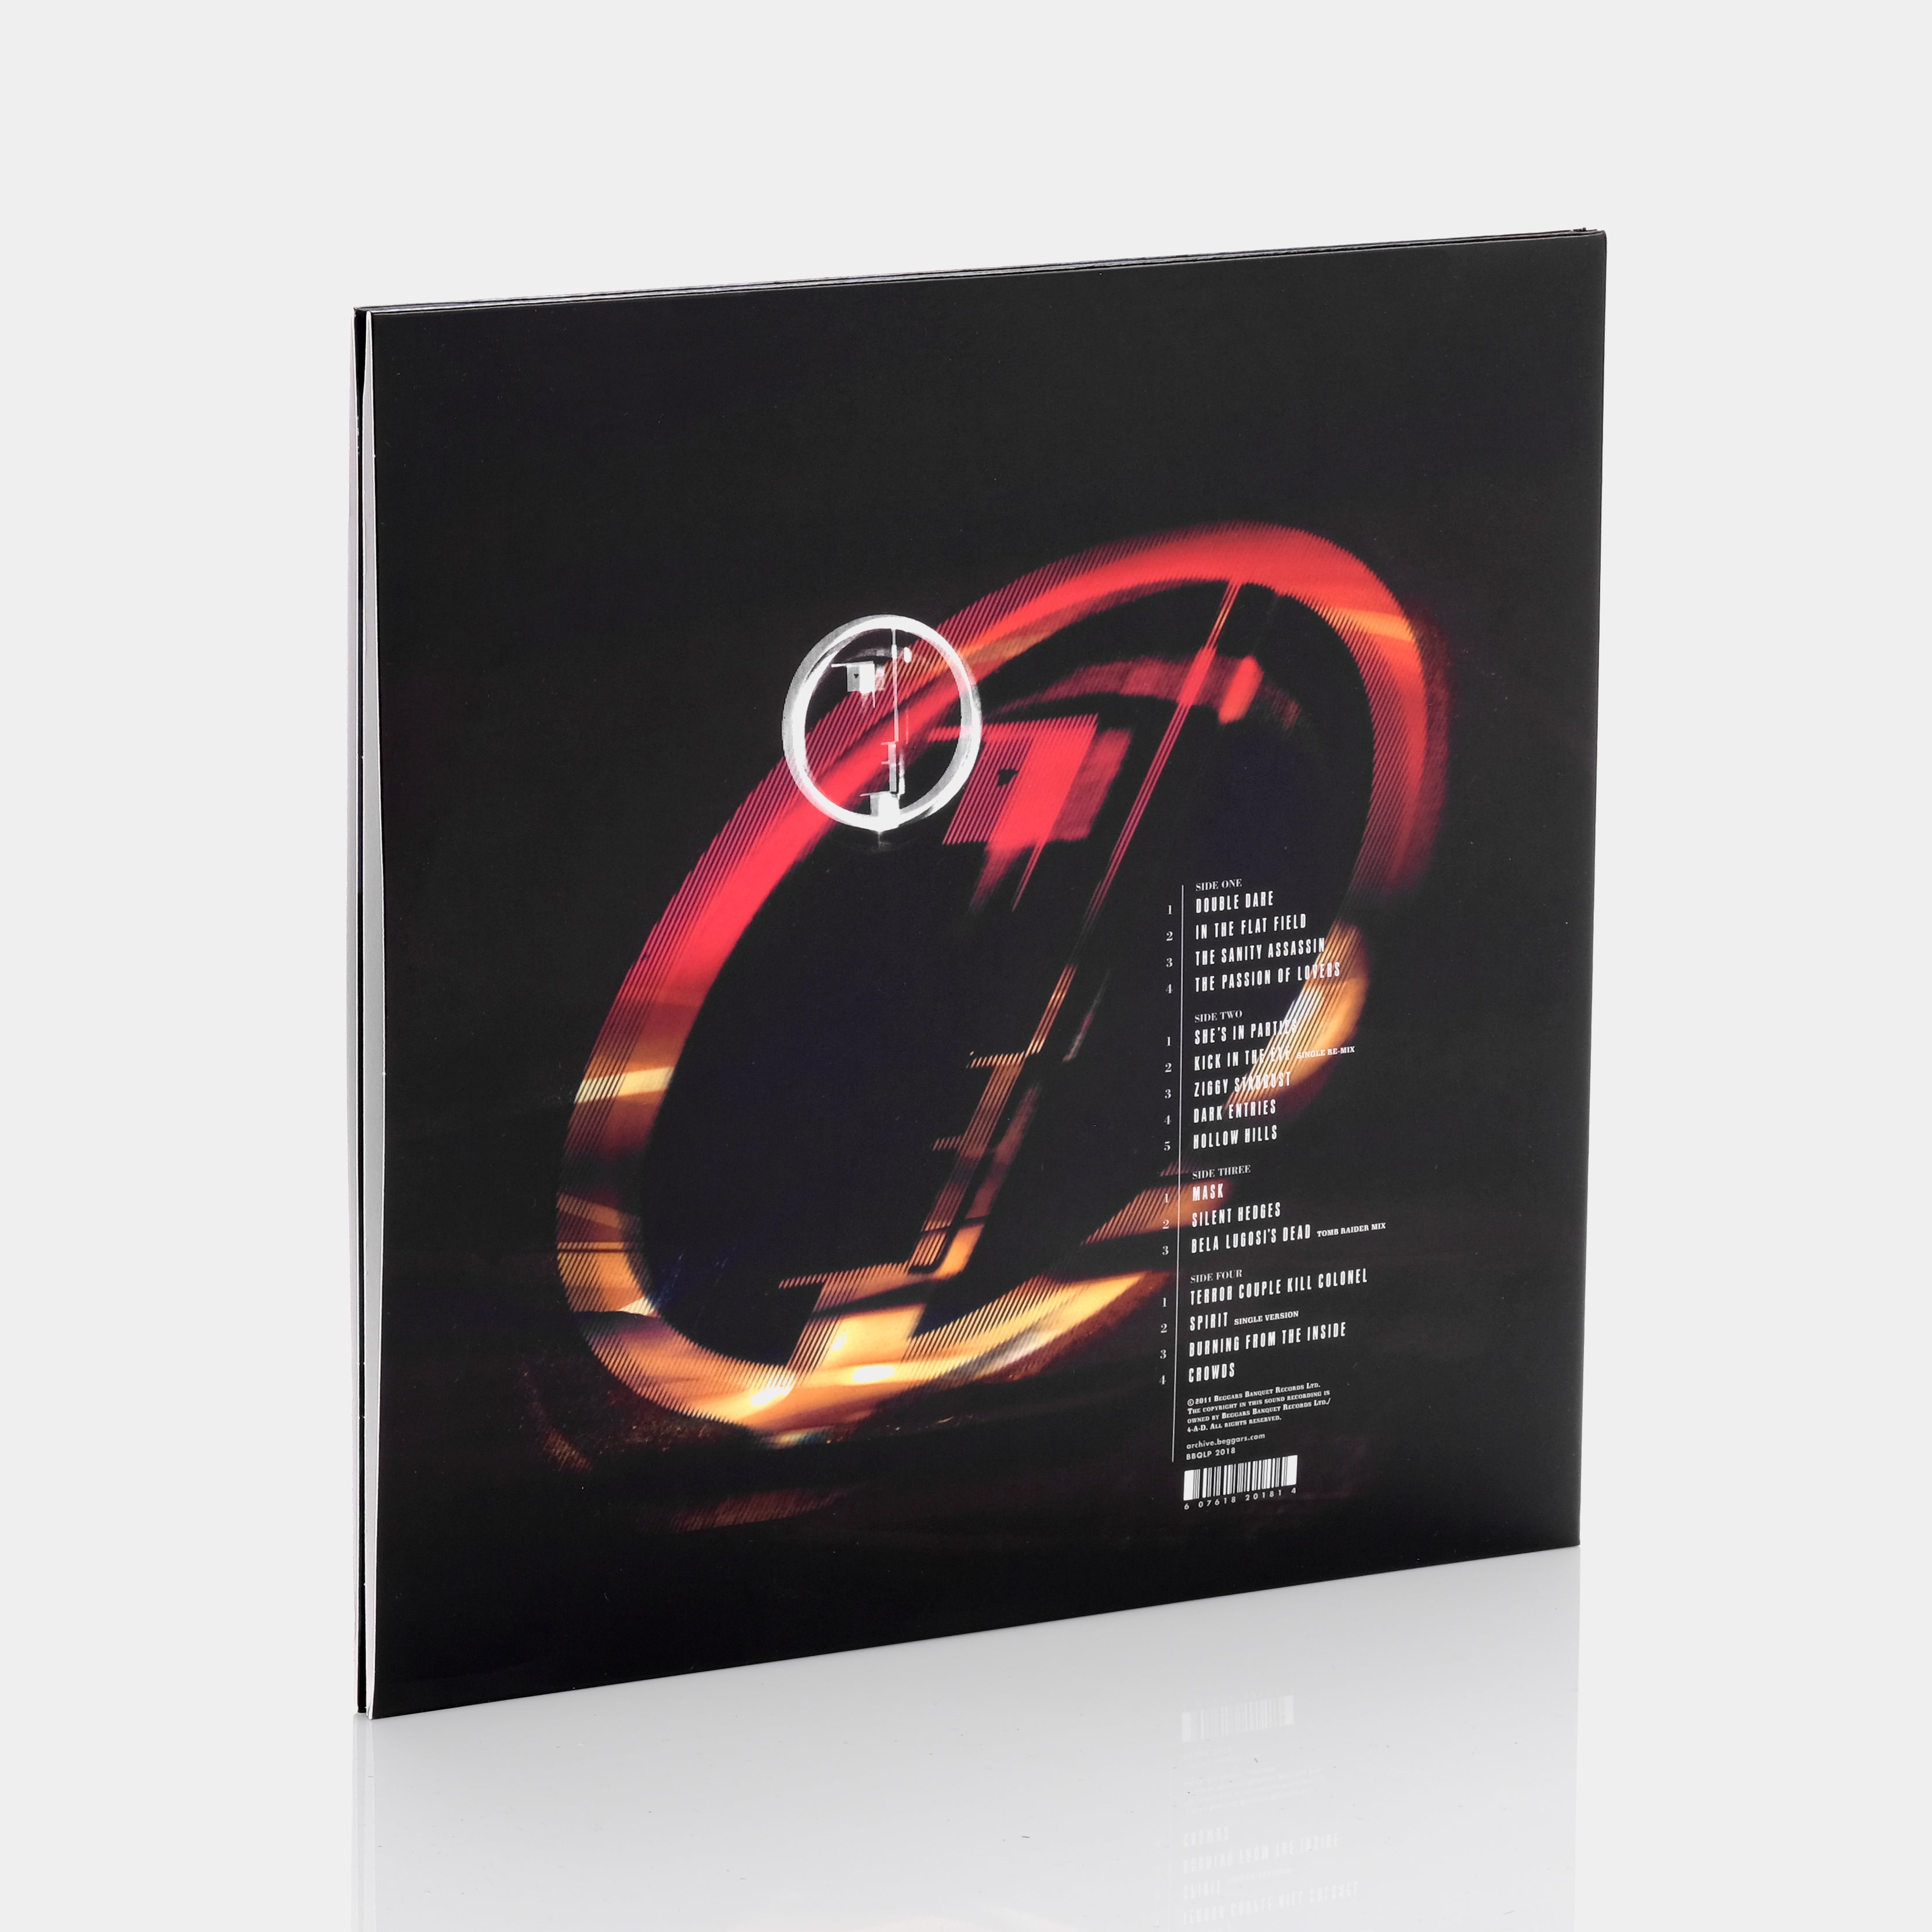 Bauhaus - Best Of Bauhaus | Crackle 2xLP Vinyl Record